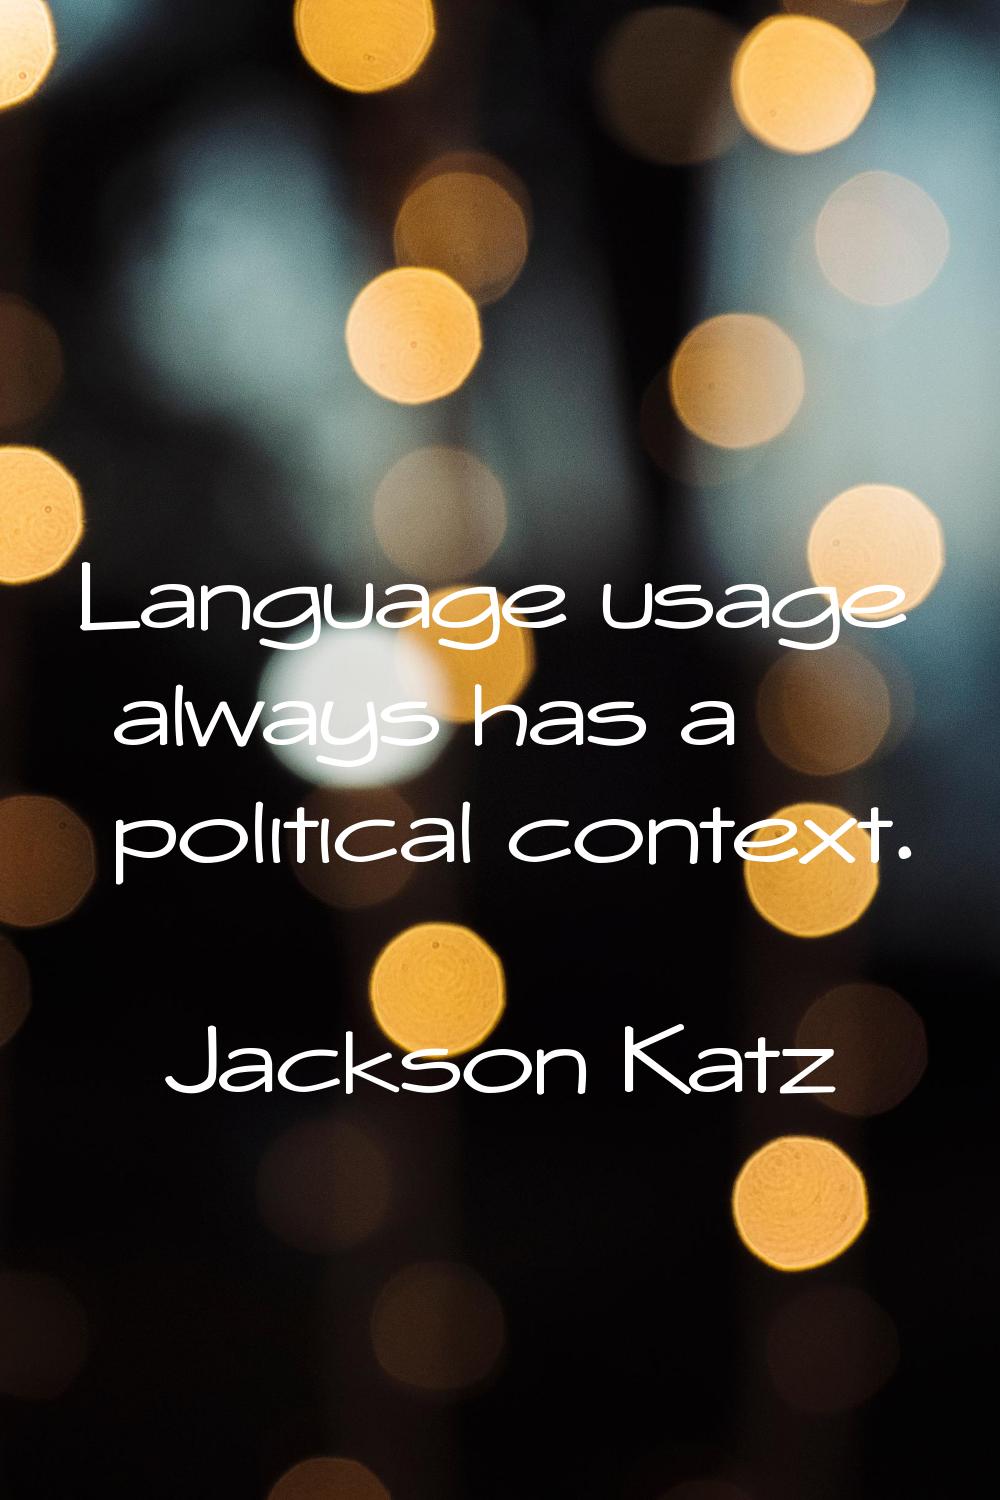 Language usage always has a political context.